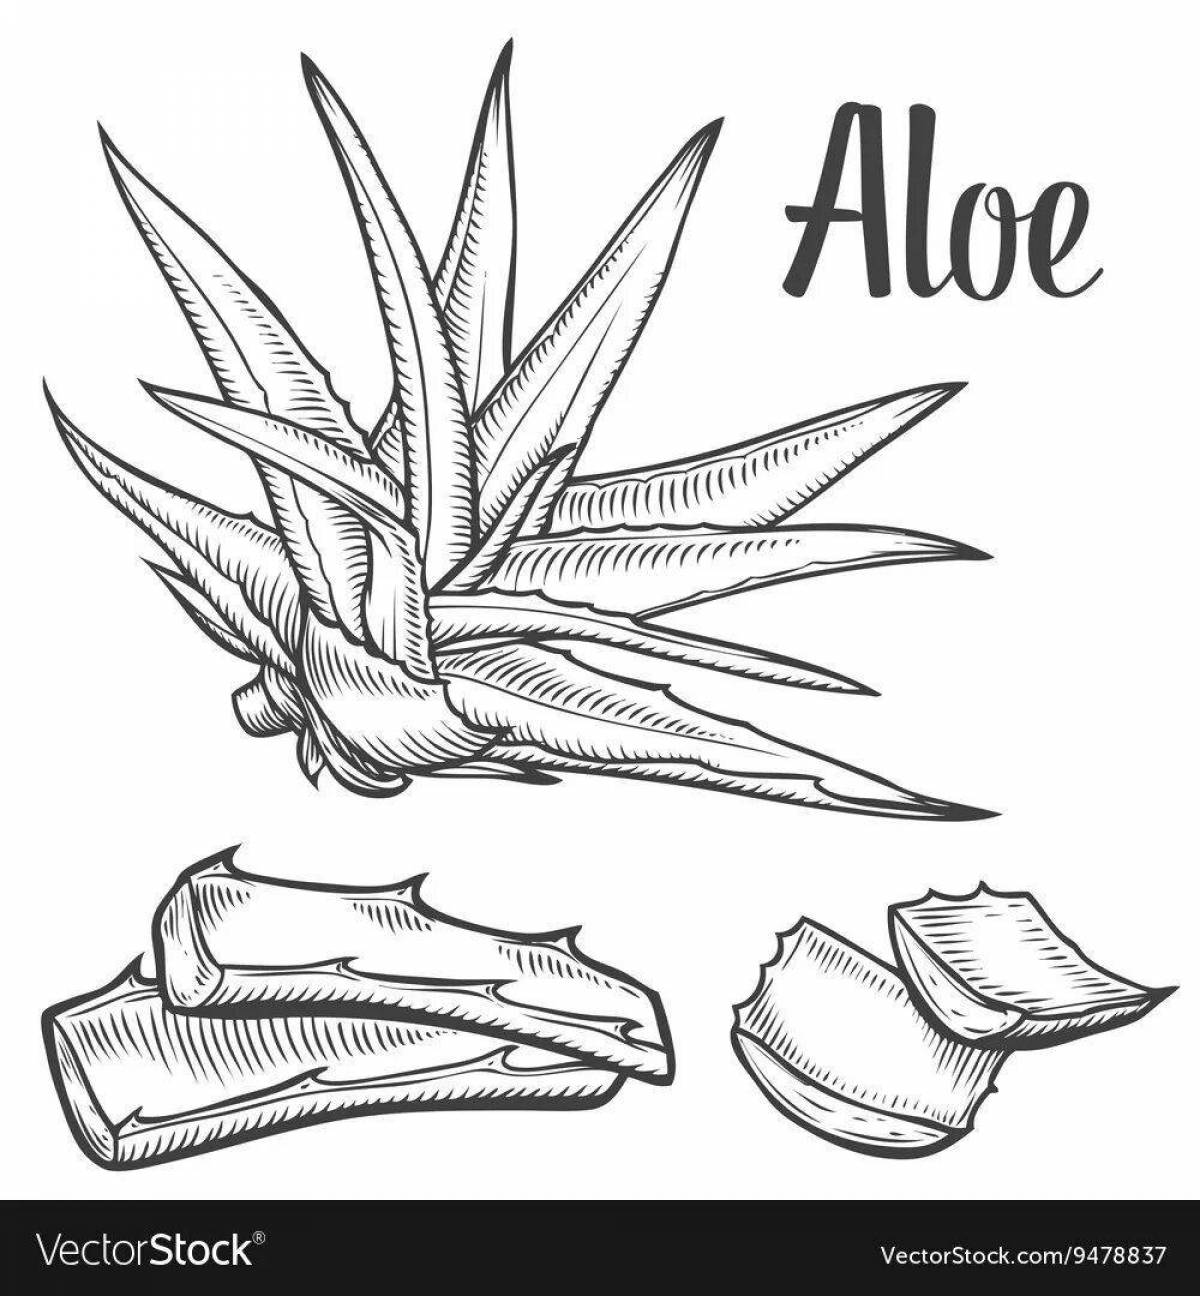 Aloe coloring book for preschoolers